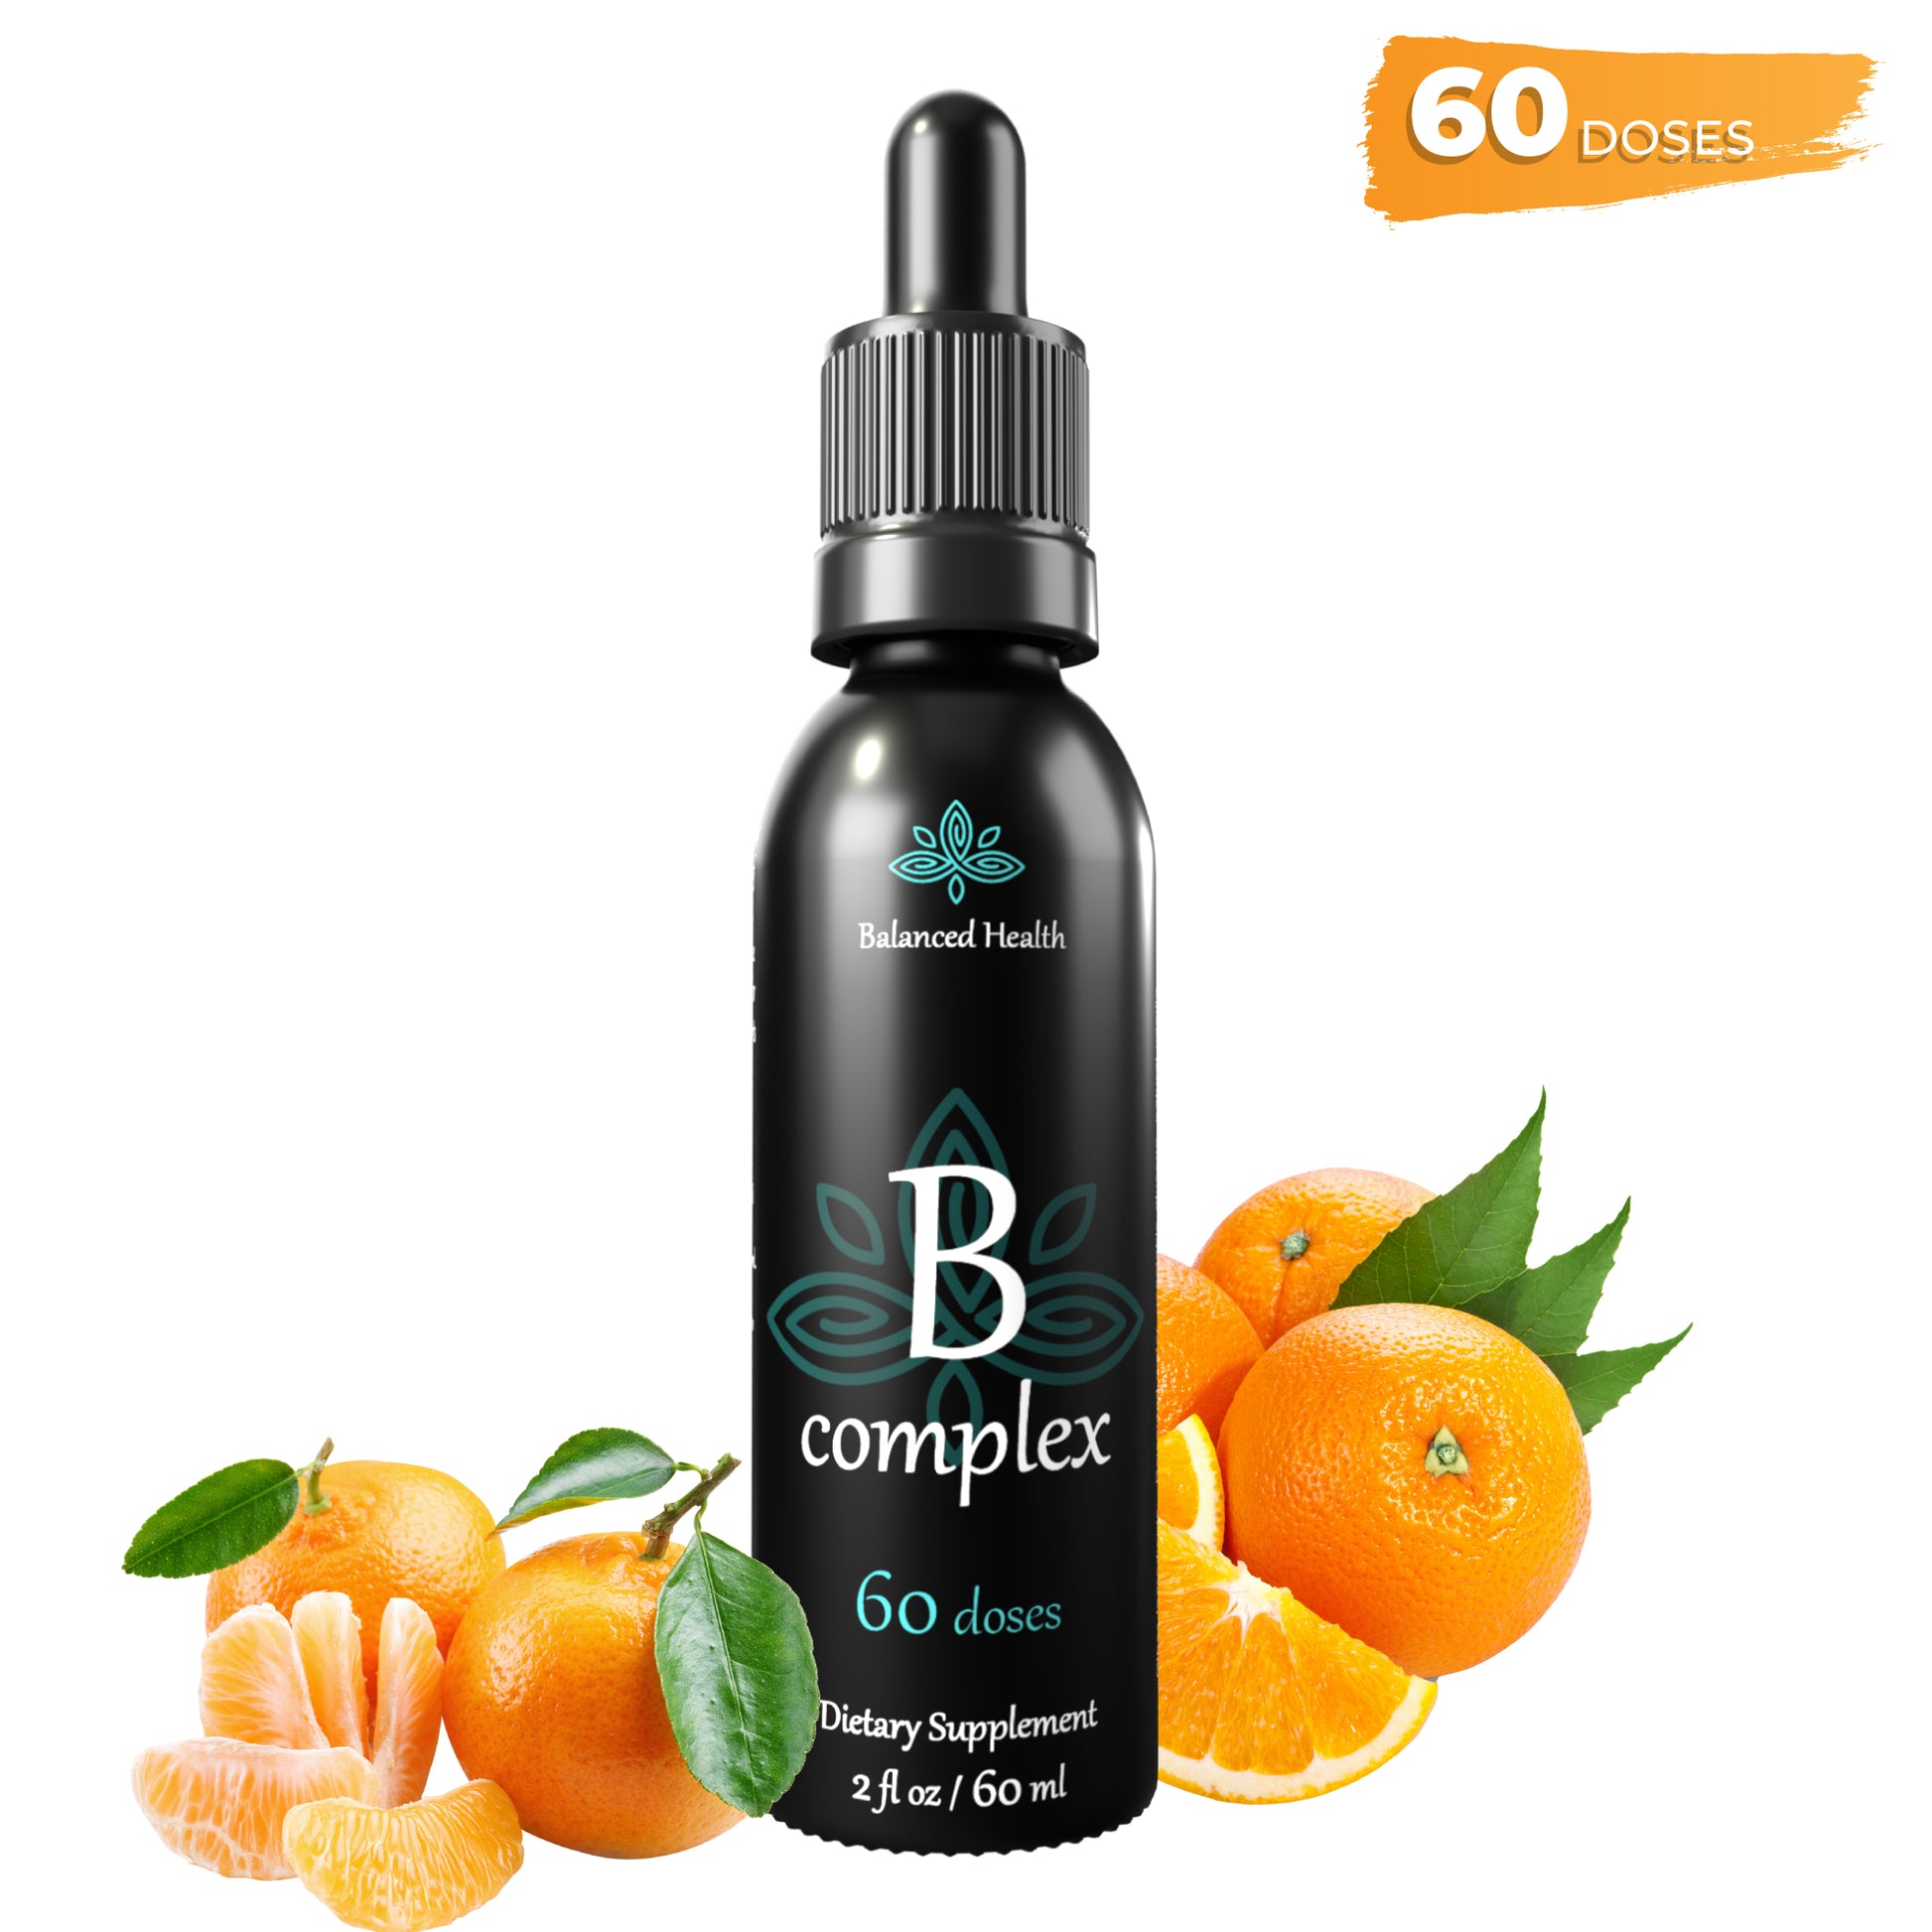 Balanced Health naturally sourced Liquid Vitamin B Complex in a great tasting natural vanilla, orange, and blood orange flavored liquid supplement